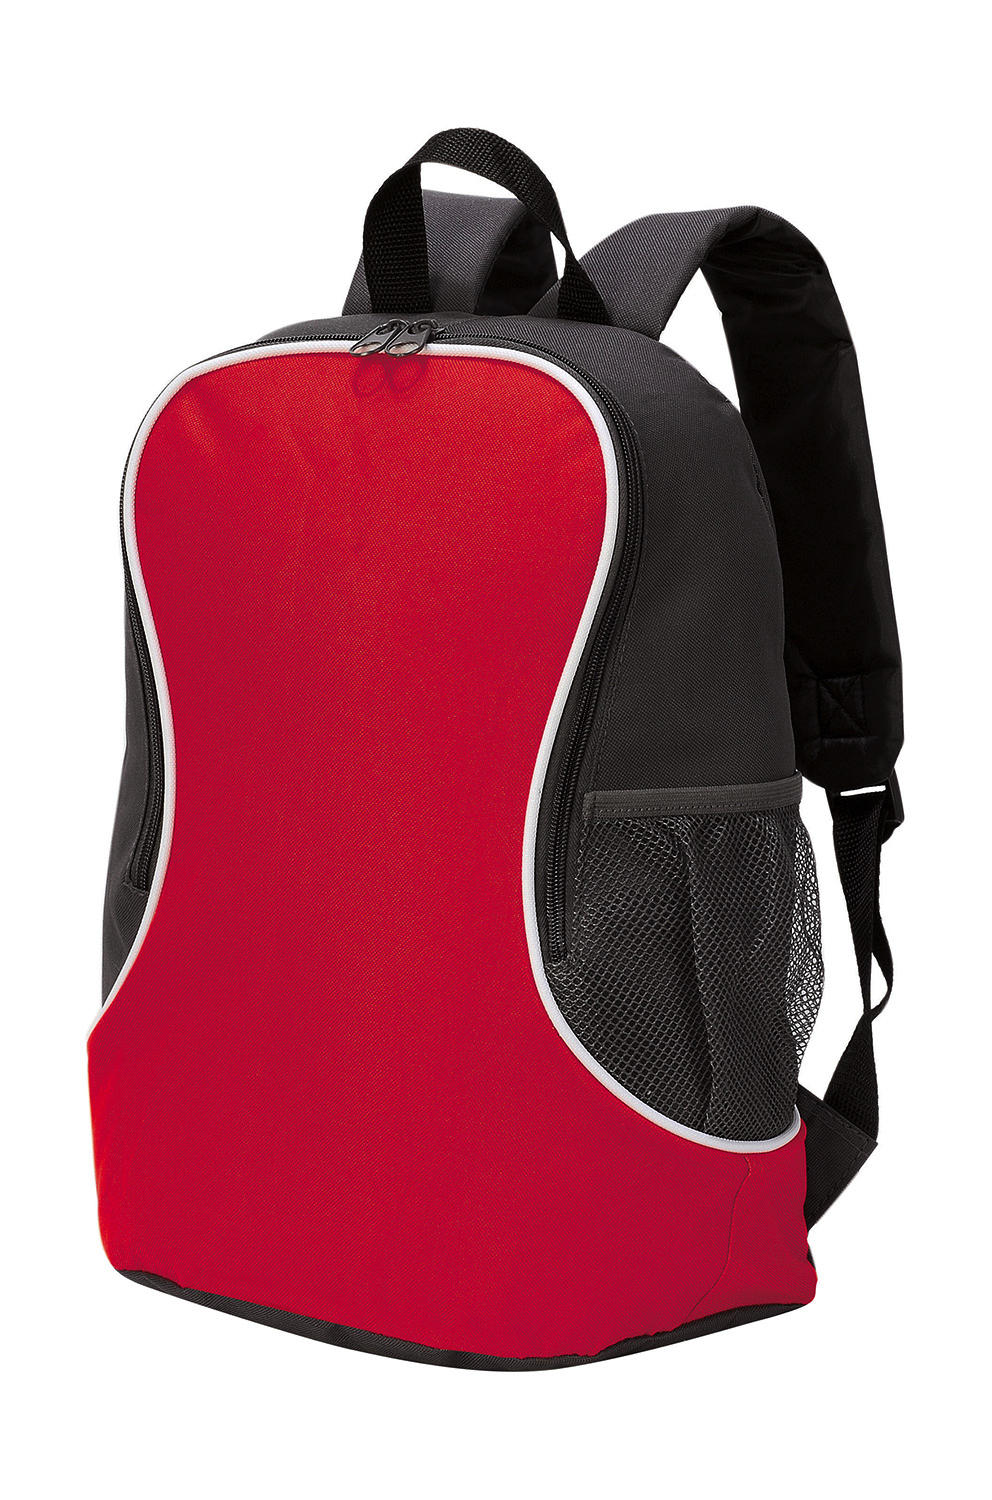  Fuji Basic Backpack in Farbe Red/Black